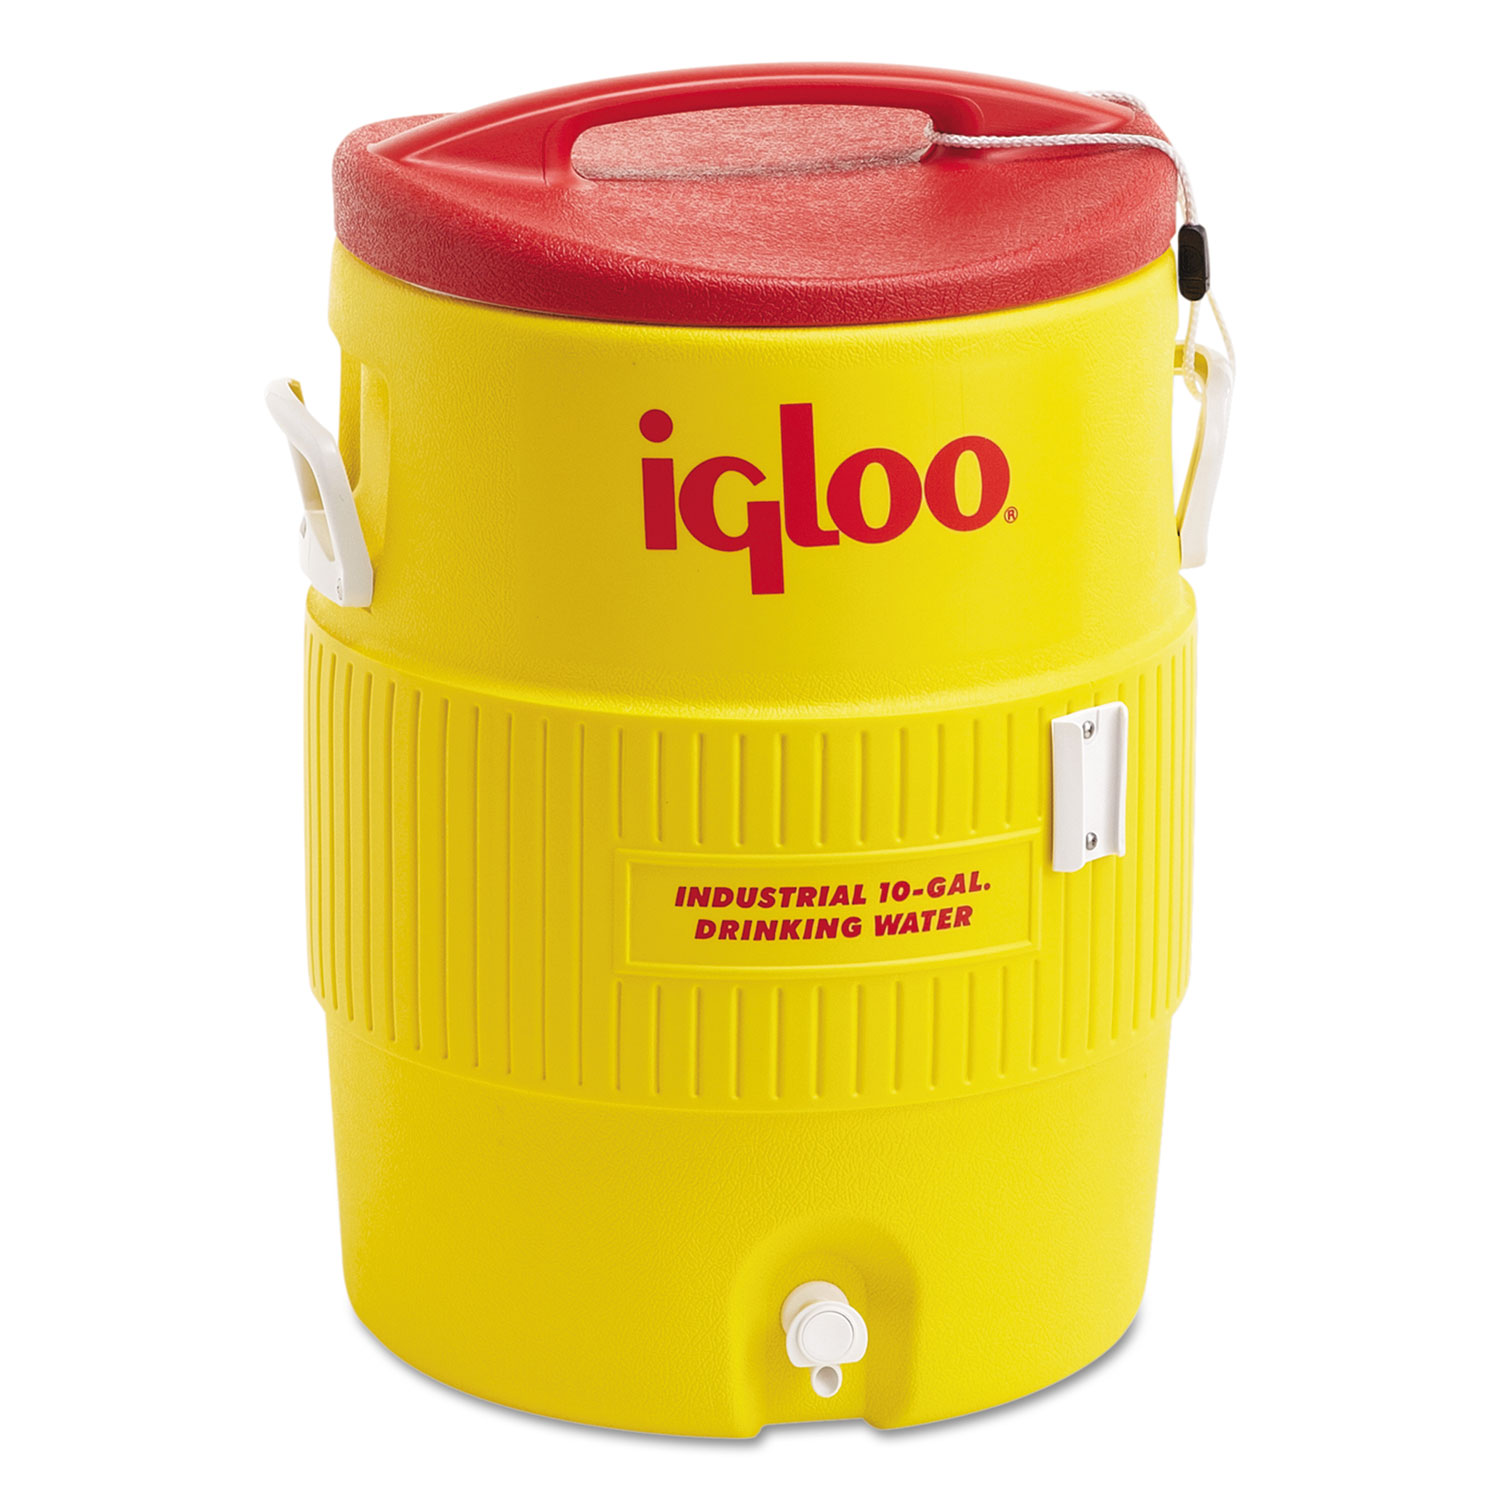  Igloo 4101 Industrial Water Cooler, 10 gal, Yellow/Red (IGL4101) 